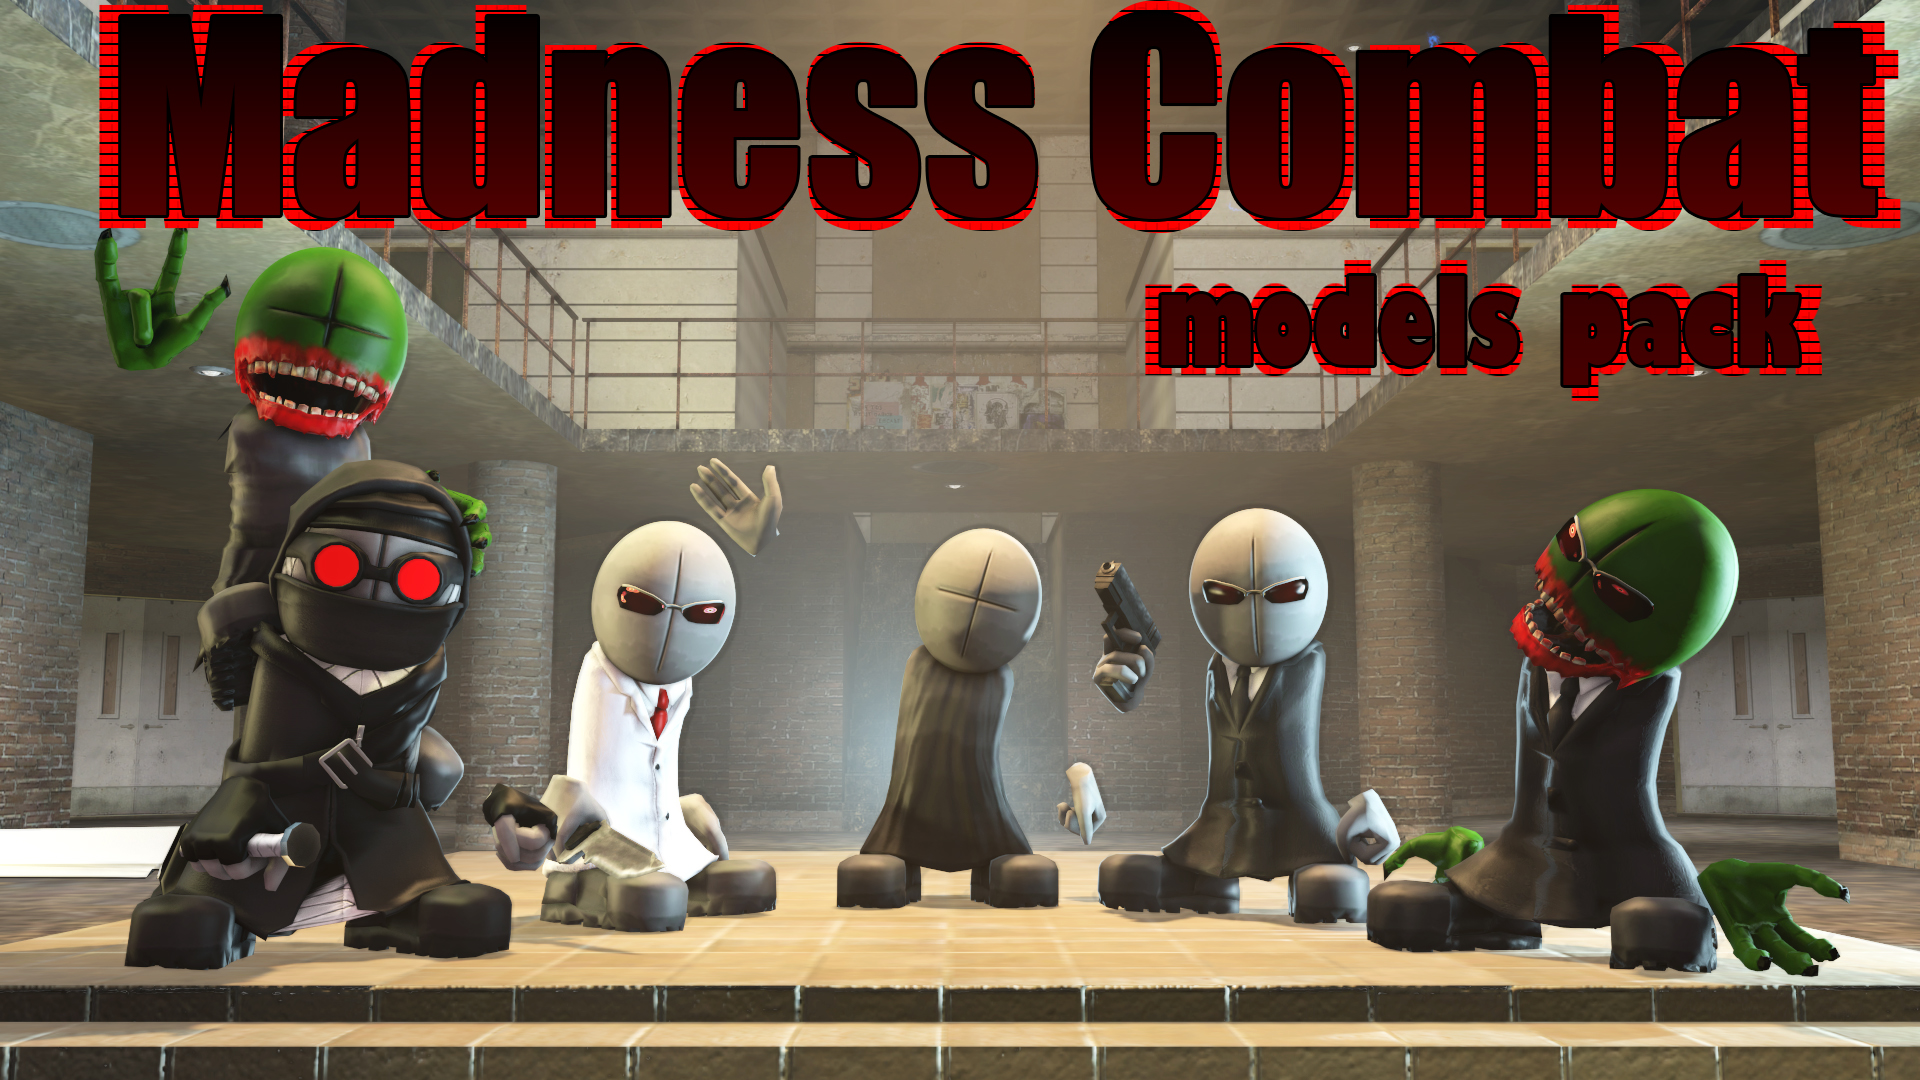 Steam Workshop::Madness combat hank